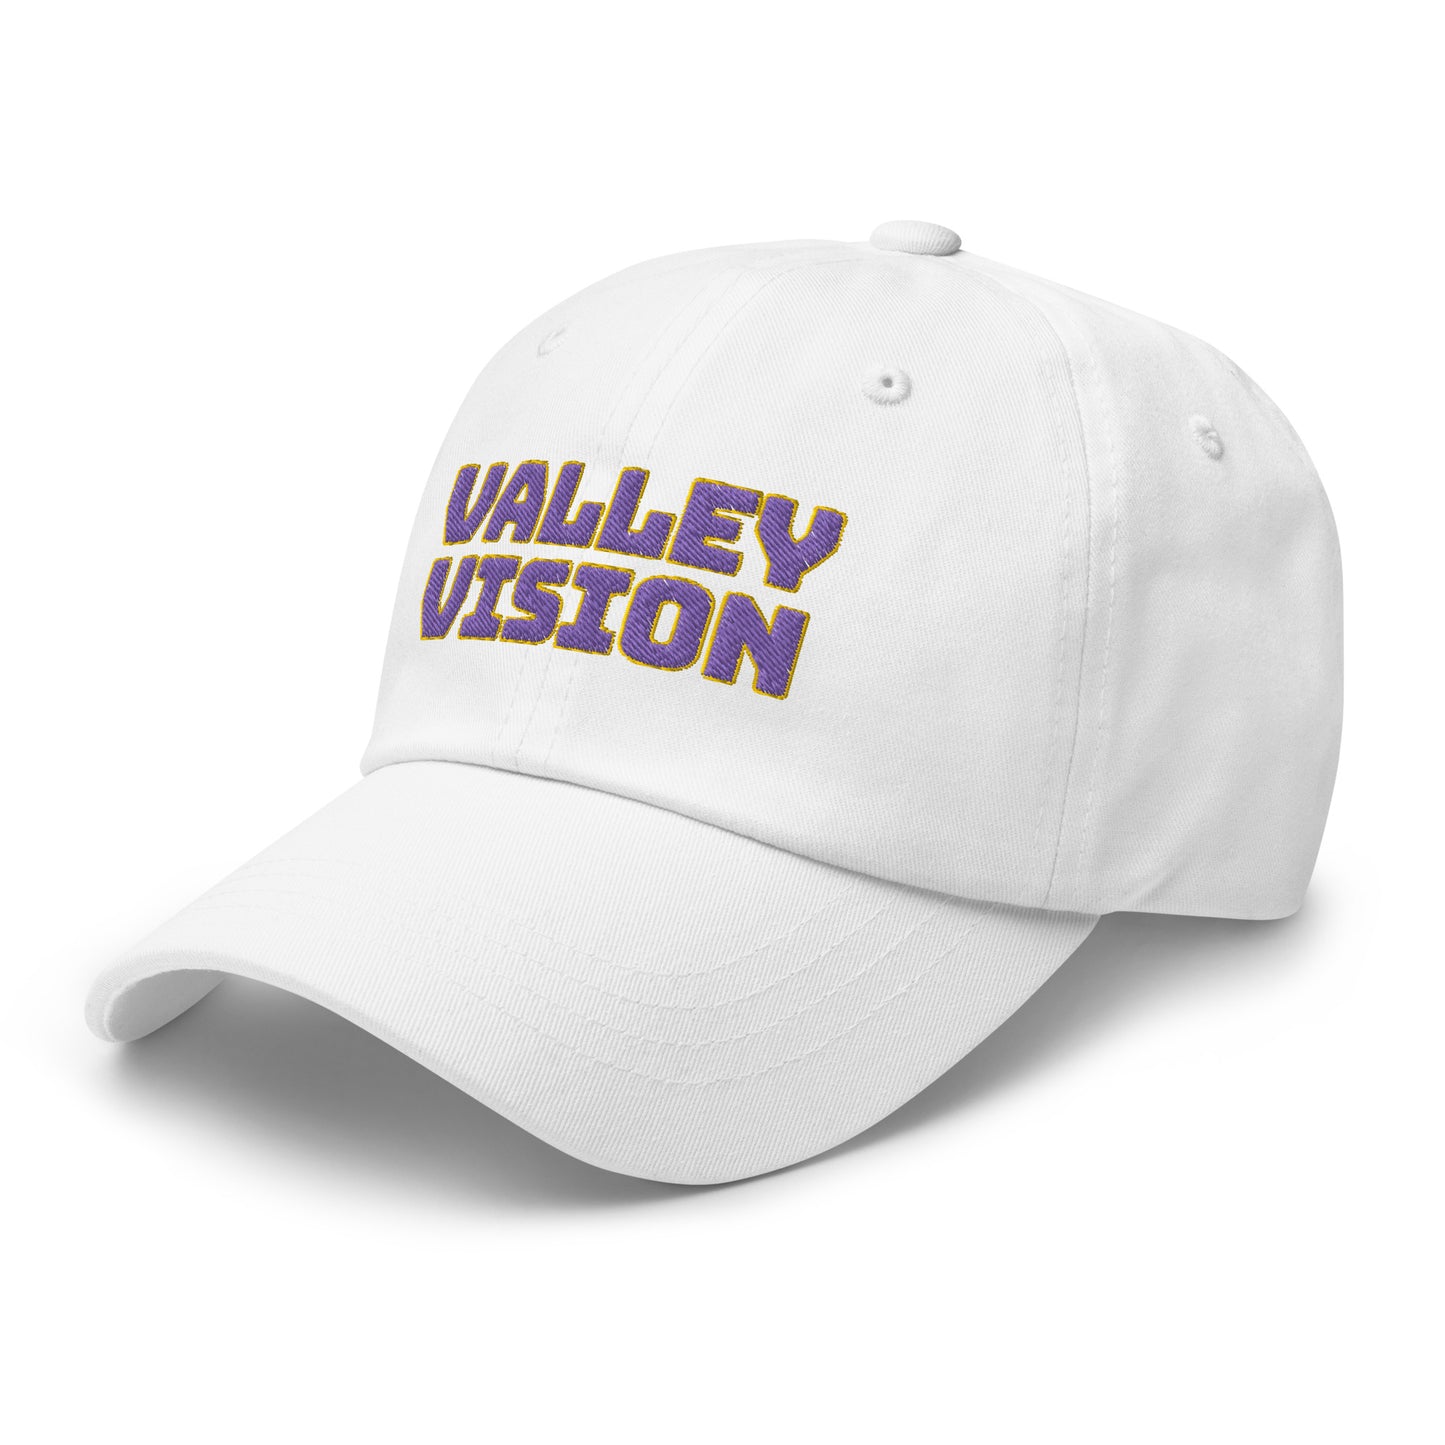 Valley Vision Dad hat